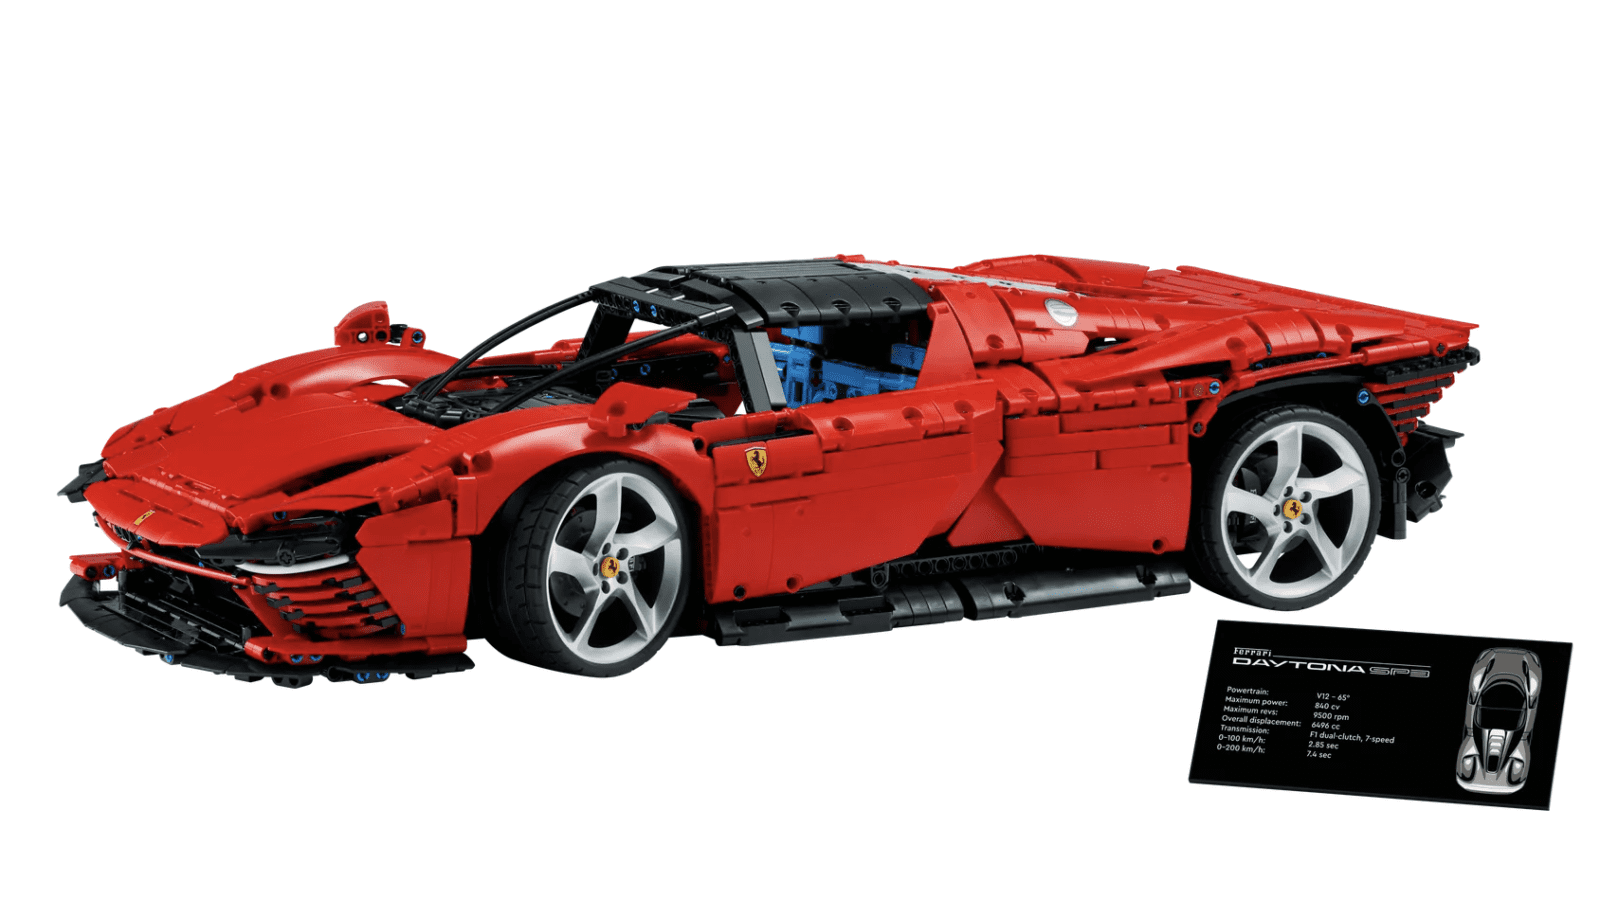 A Lego Ferrari